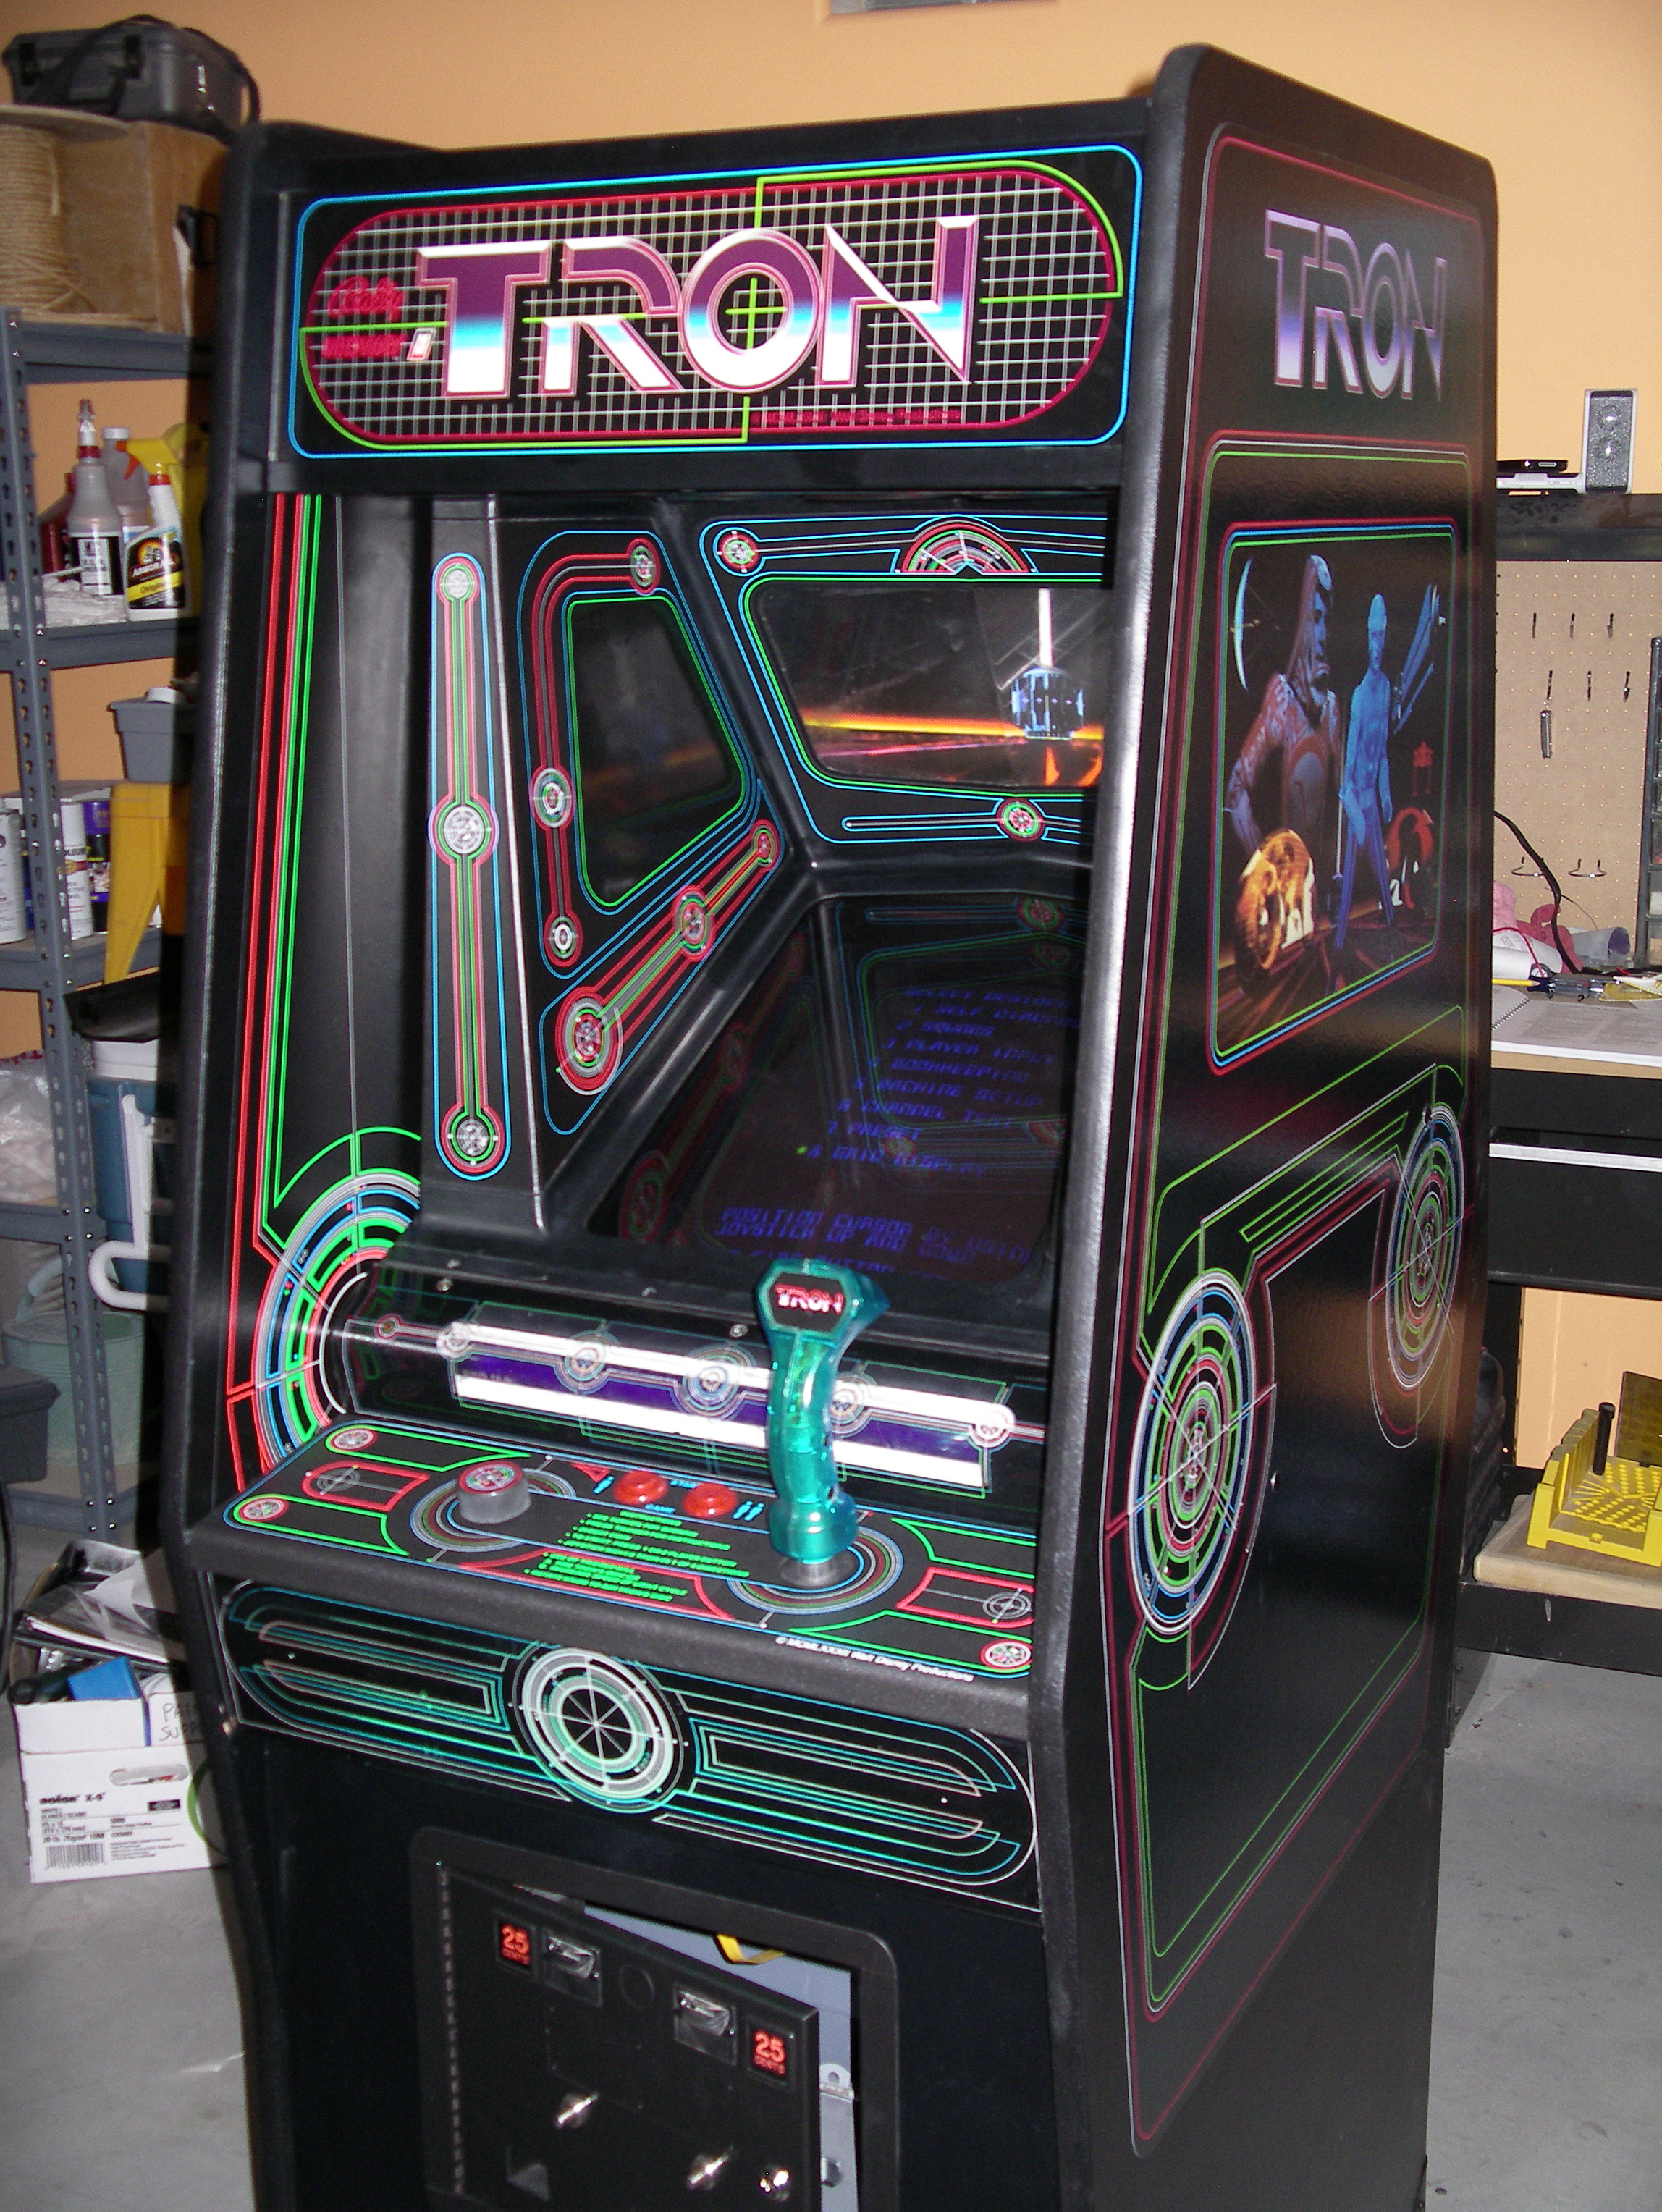 tron legacy the arcade game